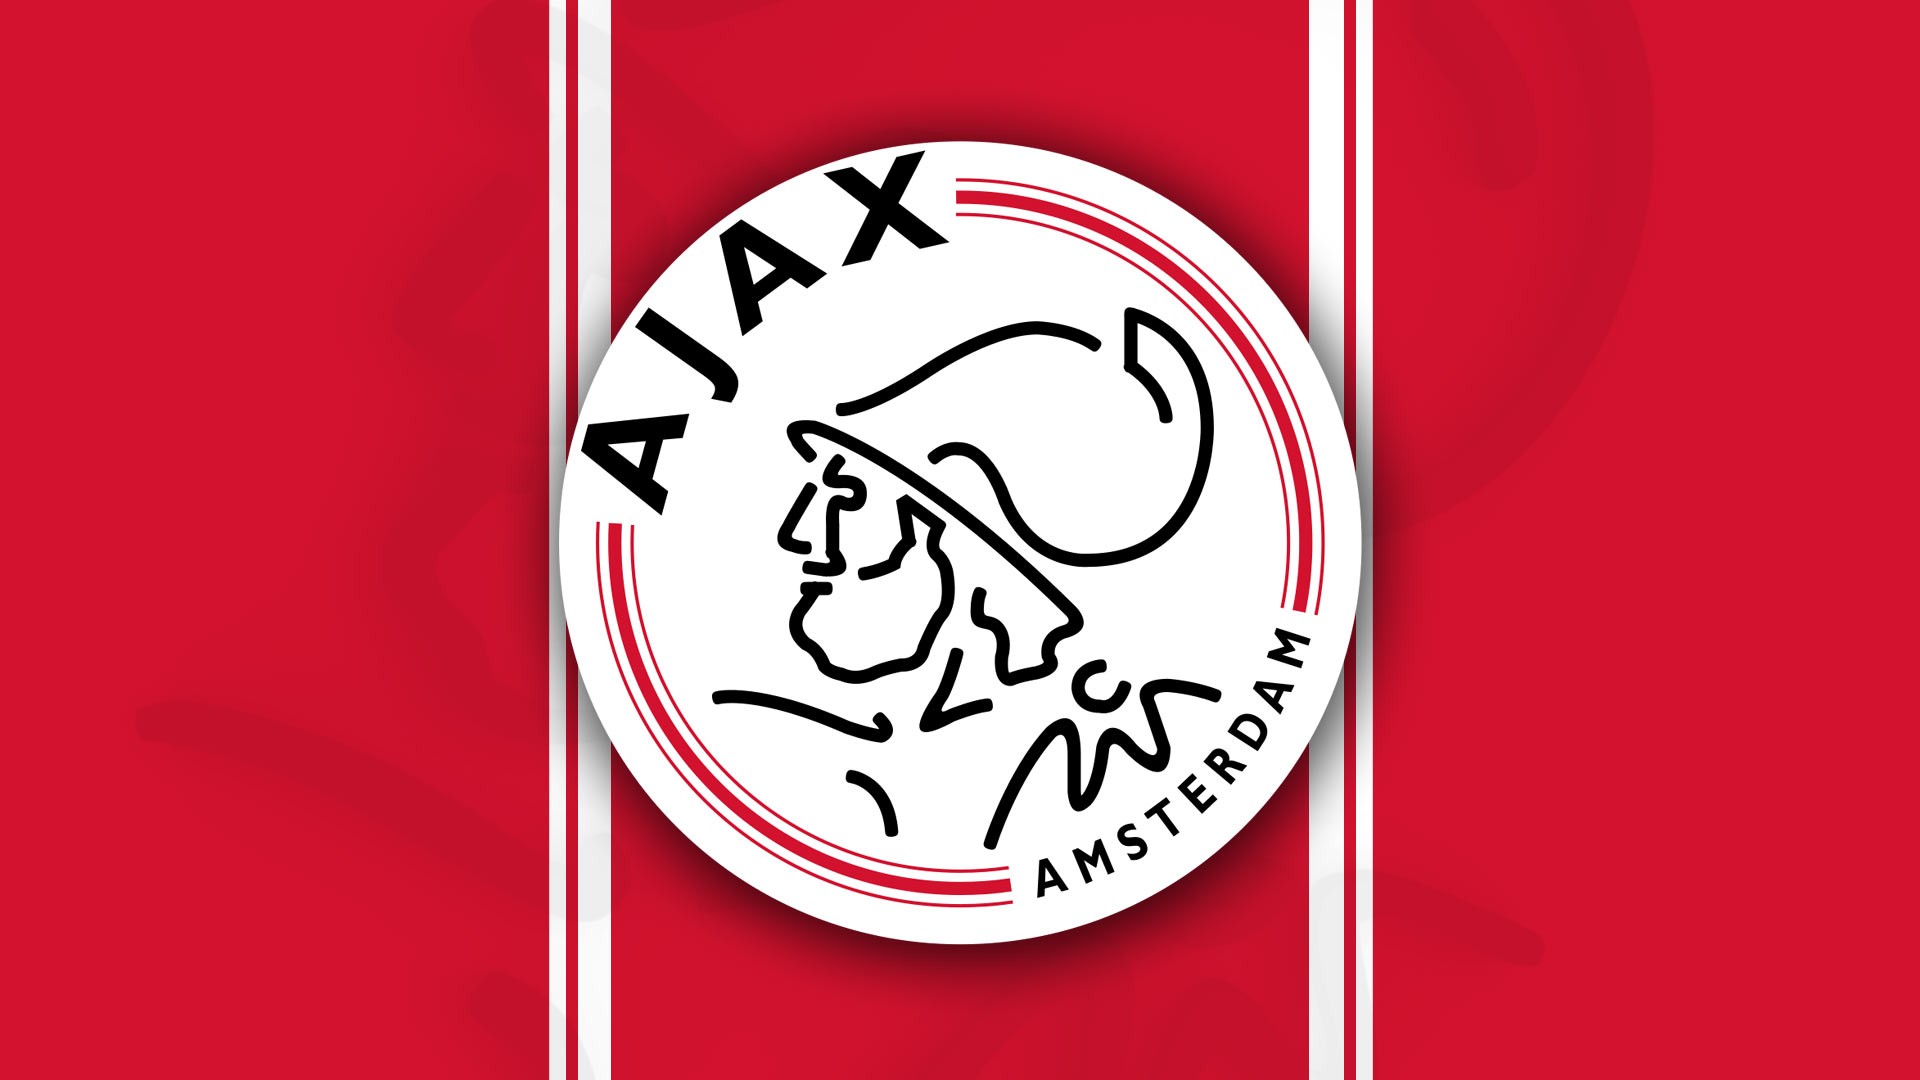 Club Football 2005: AJAX Amsterdam